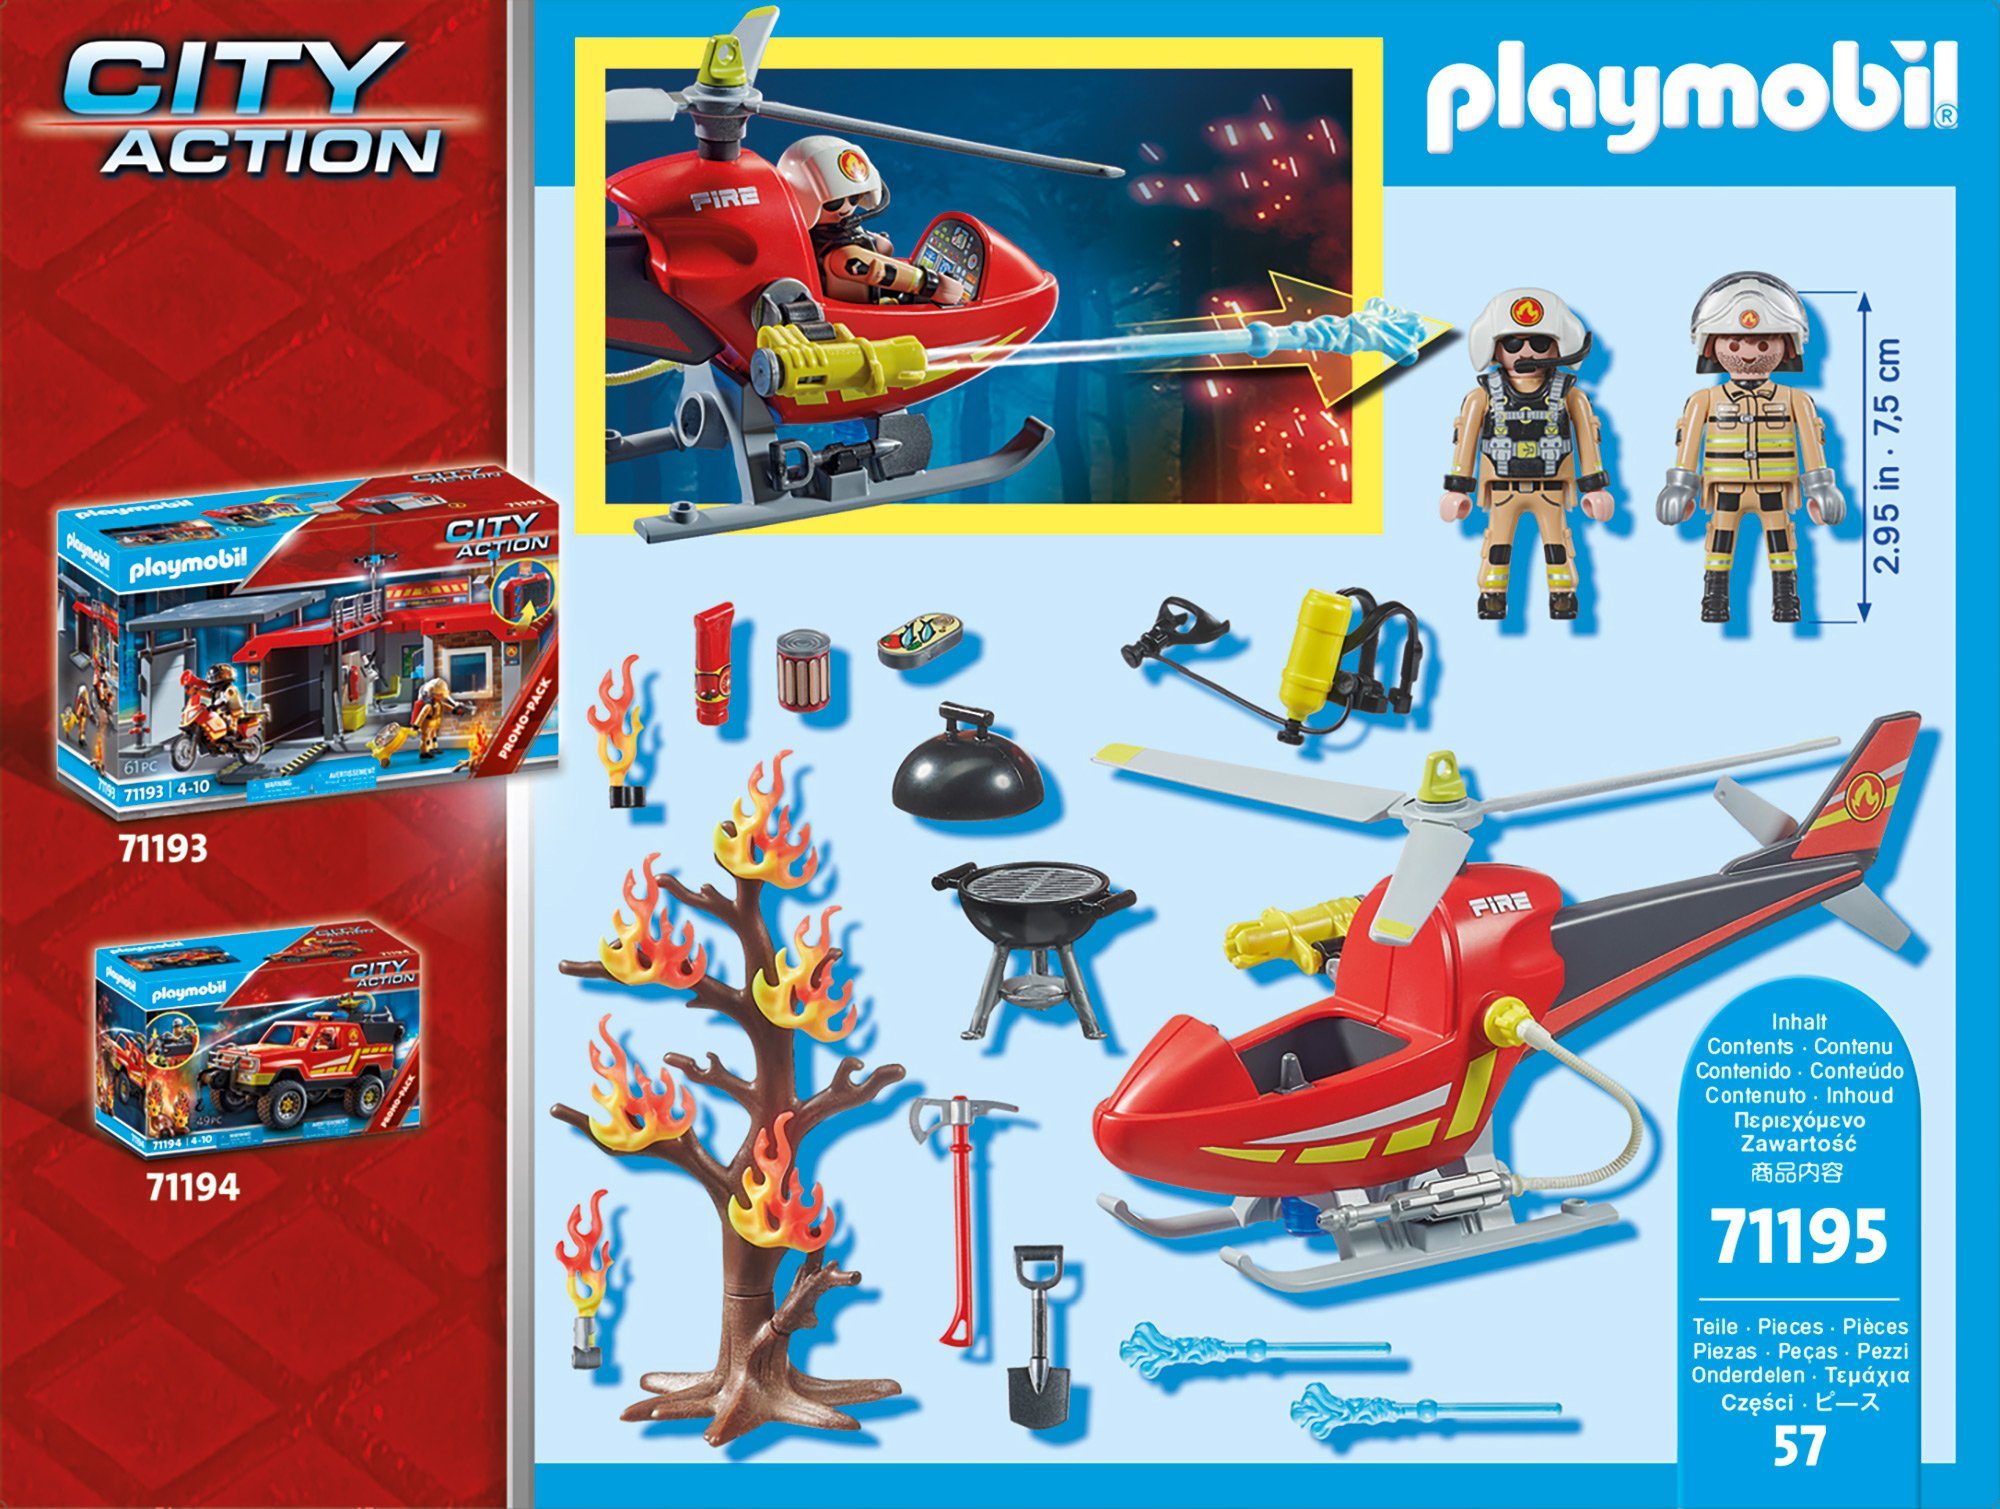 Konstruktions-Spielset Feuerwehr-Hubschrauber City Playmobil® in Action, (71195), Germany Made (57 St),